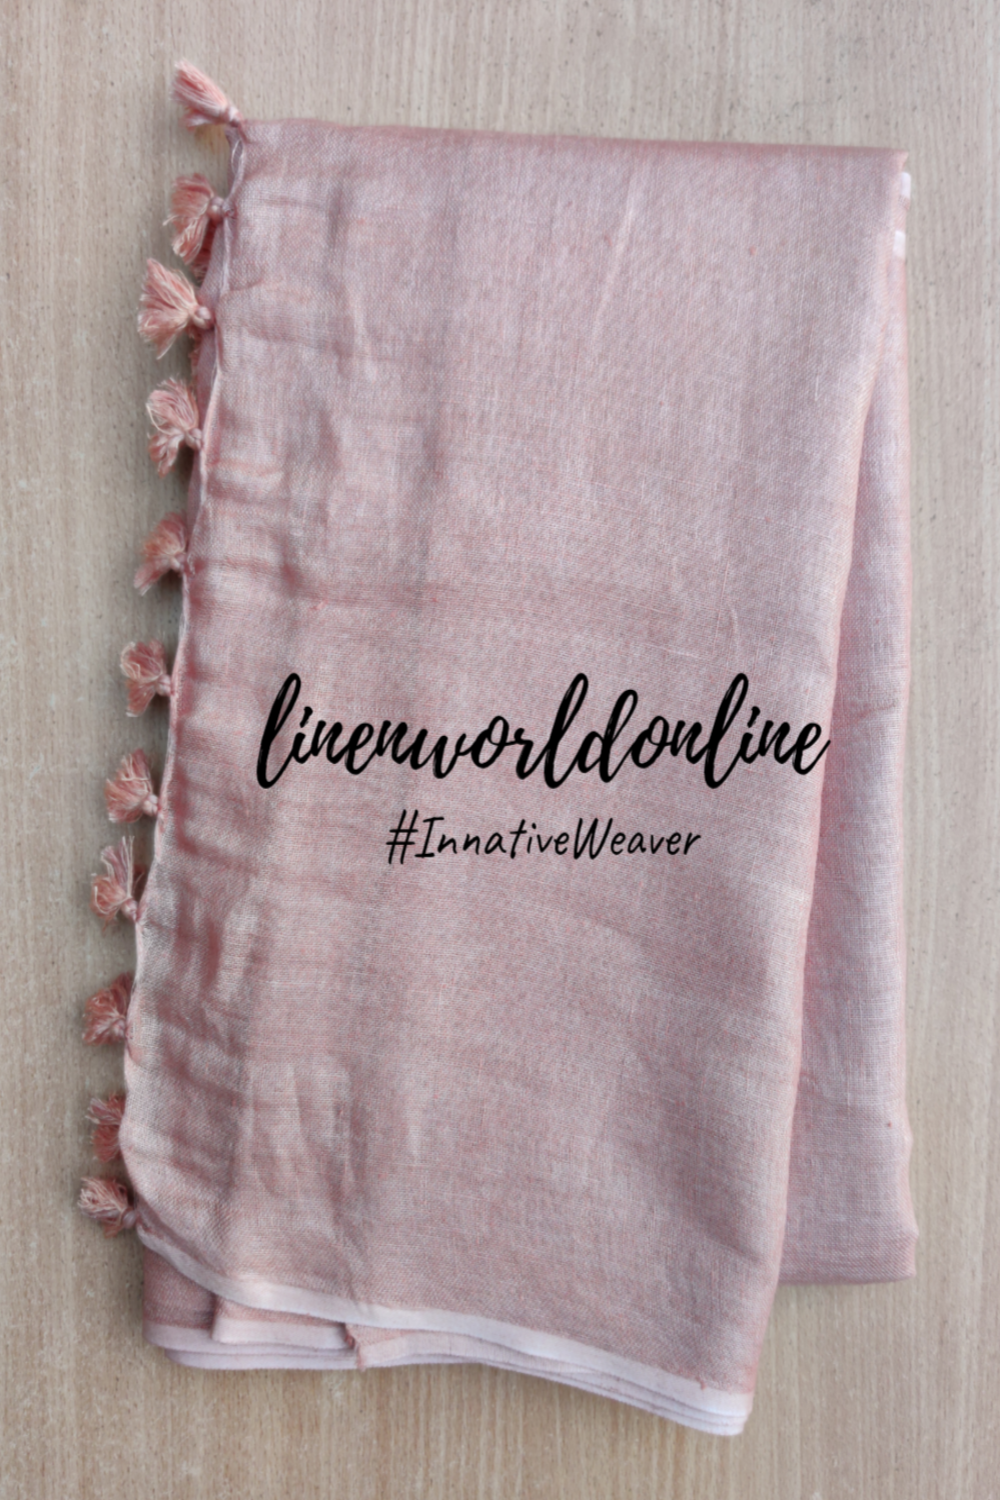 thatch handloom woven pure linen saree - linenworldonline.in